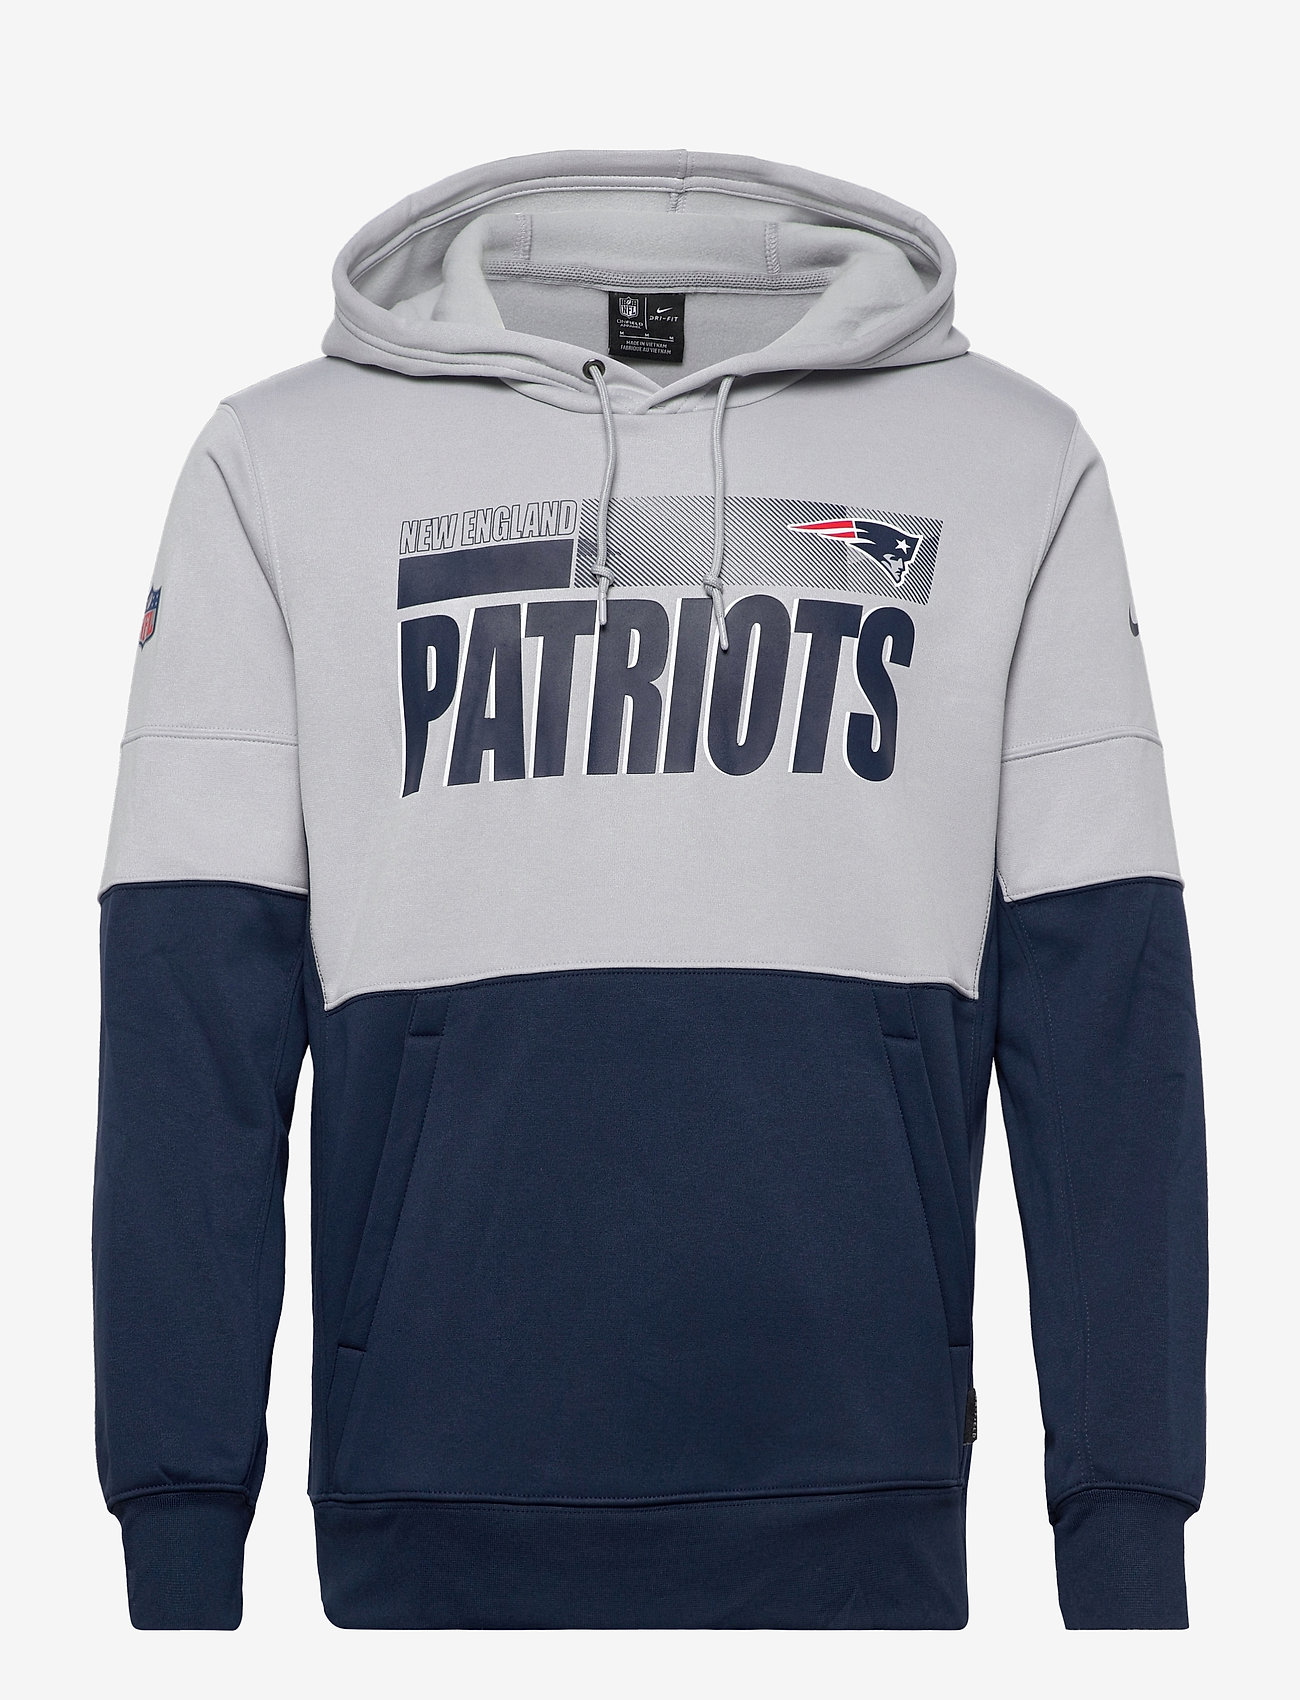 patriots nike sweatshirt